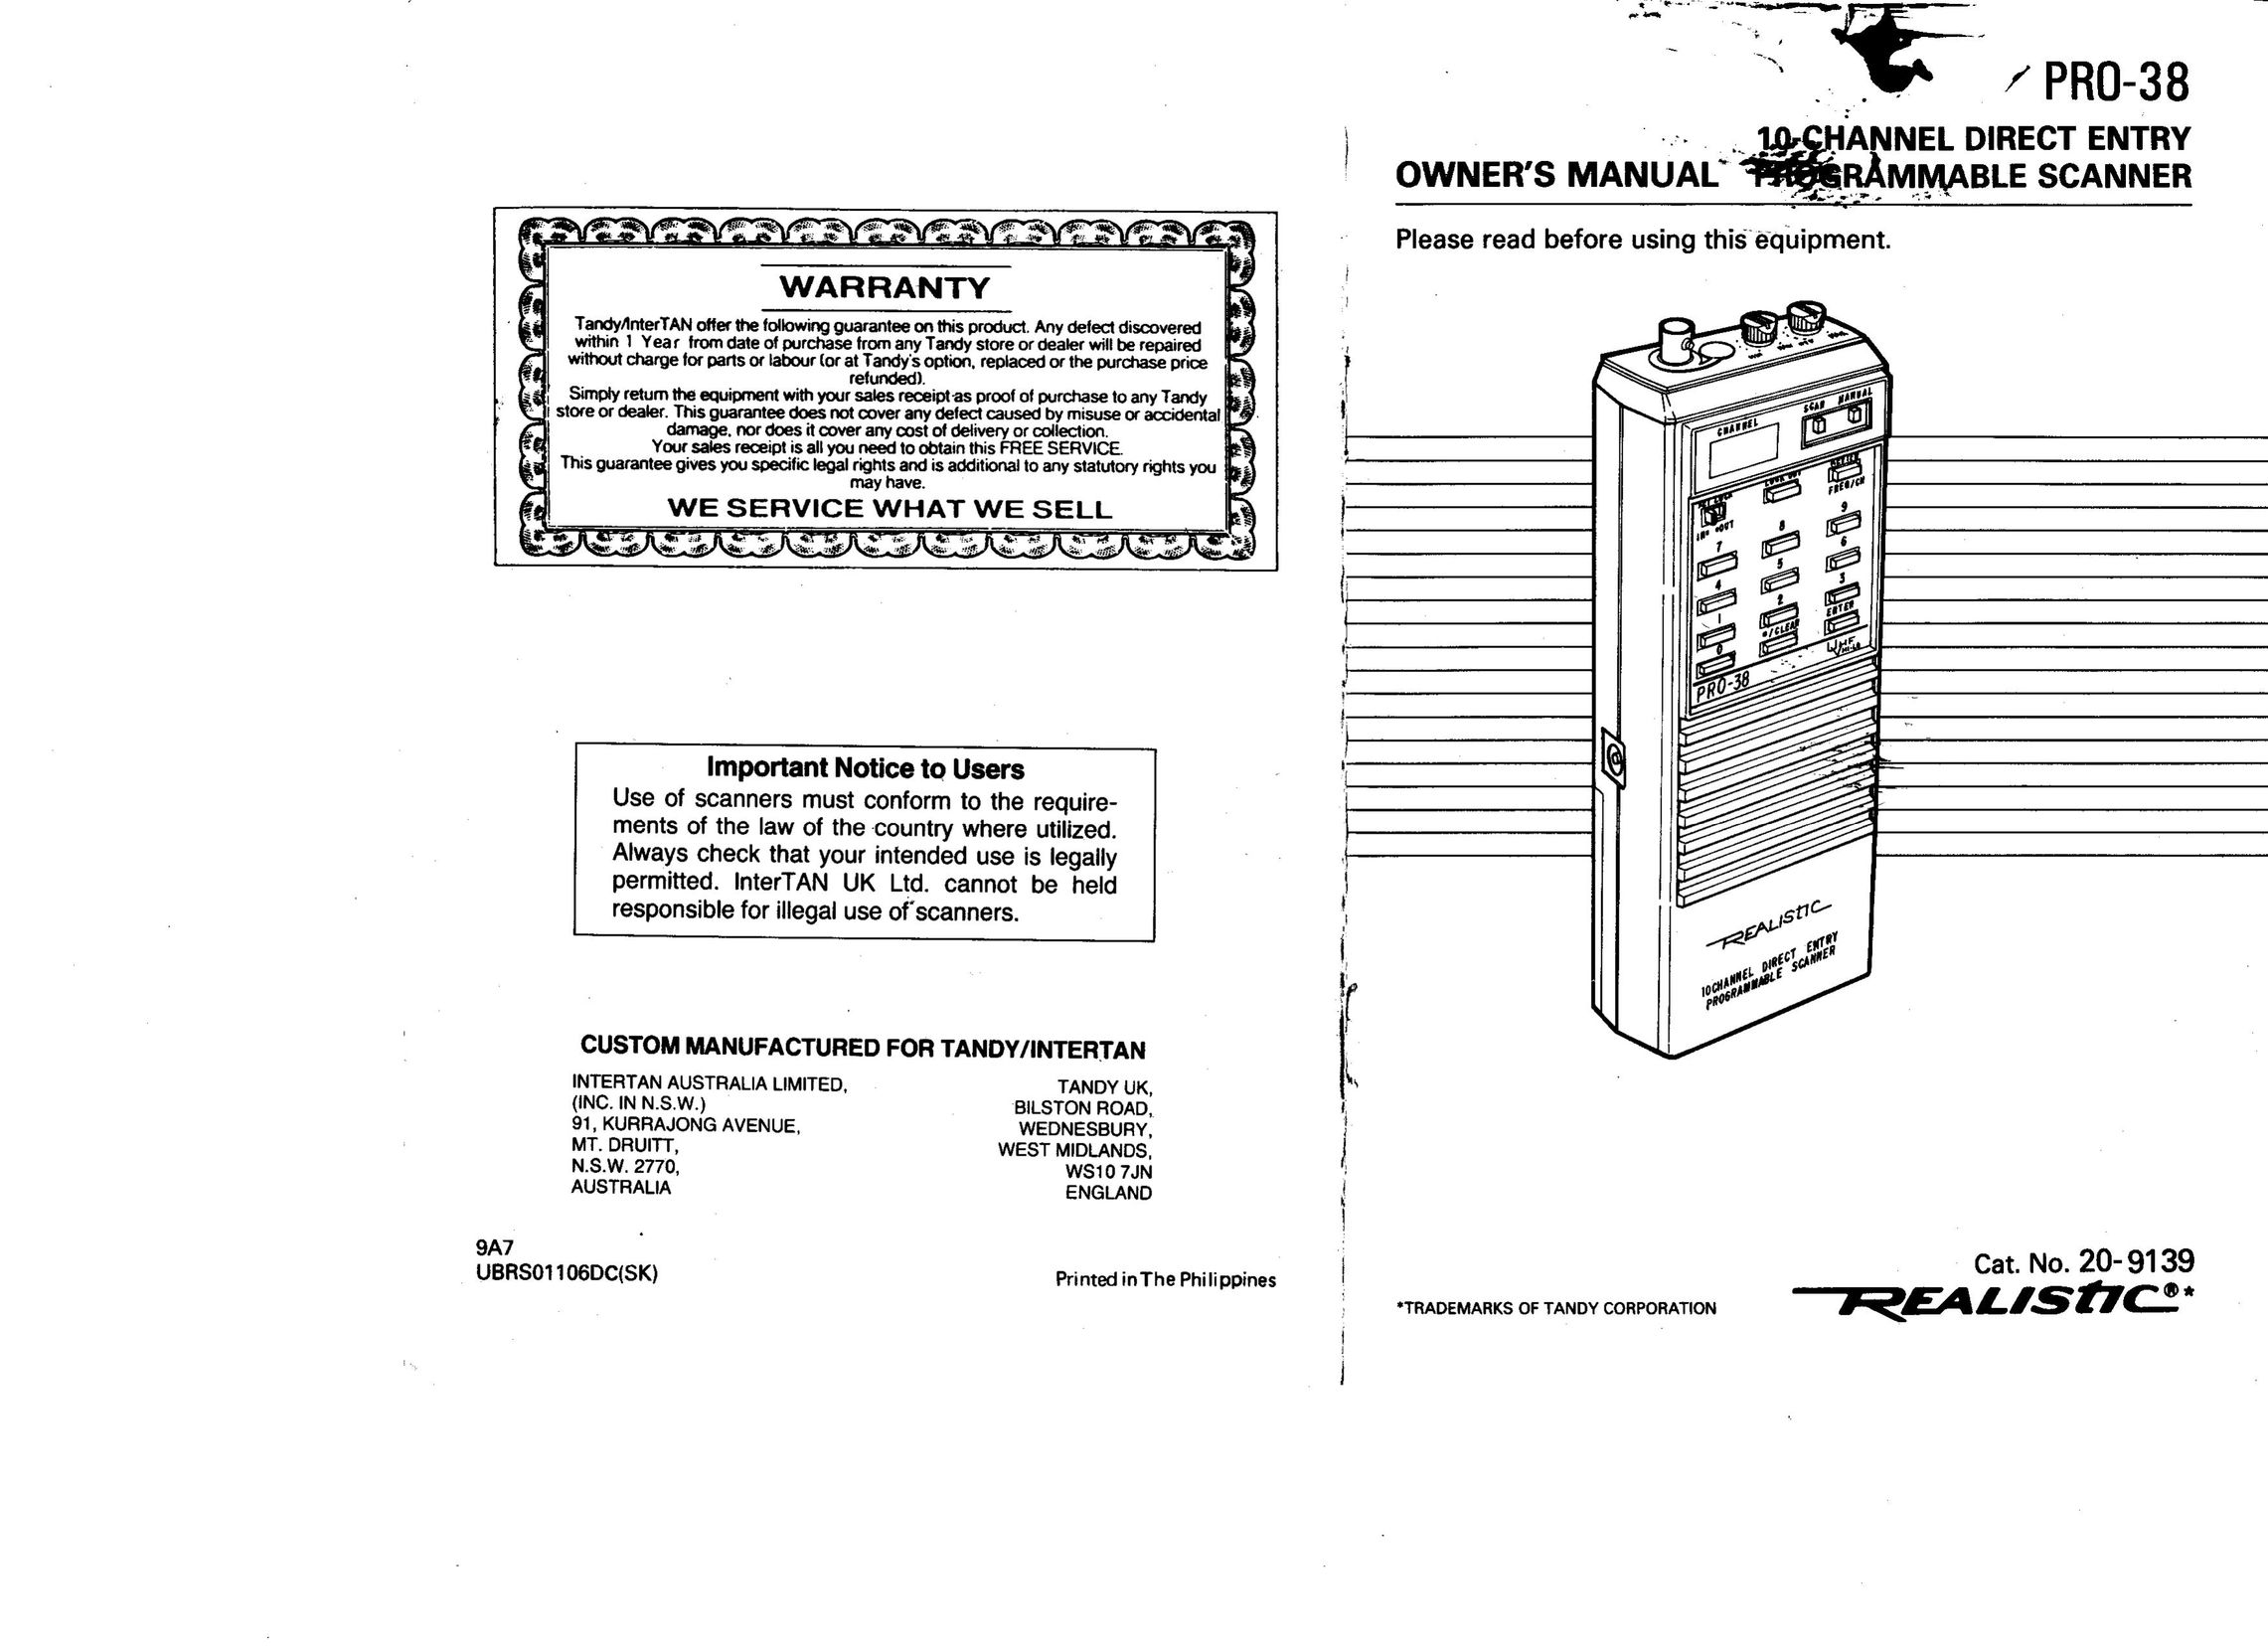 Realistic Pro-38 Satellite Radio User Manual